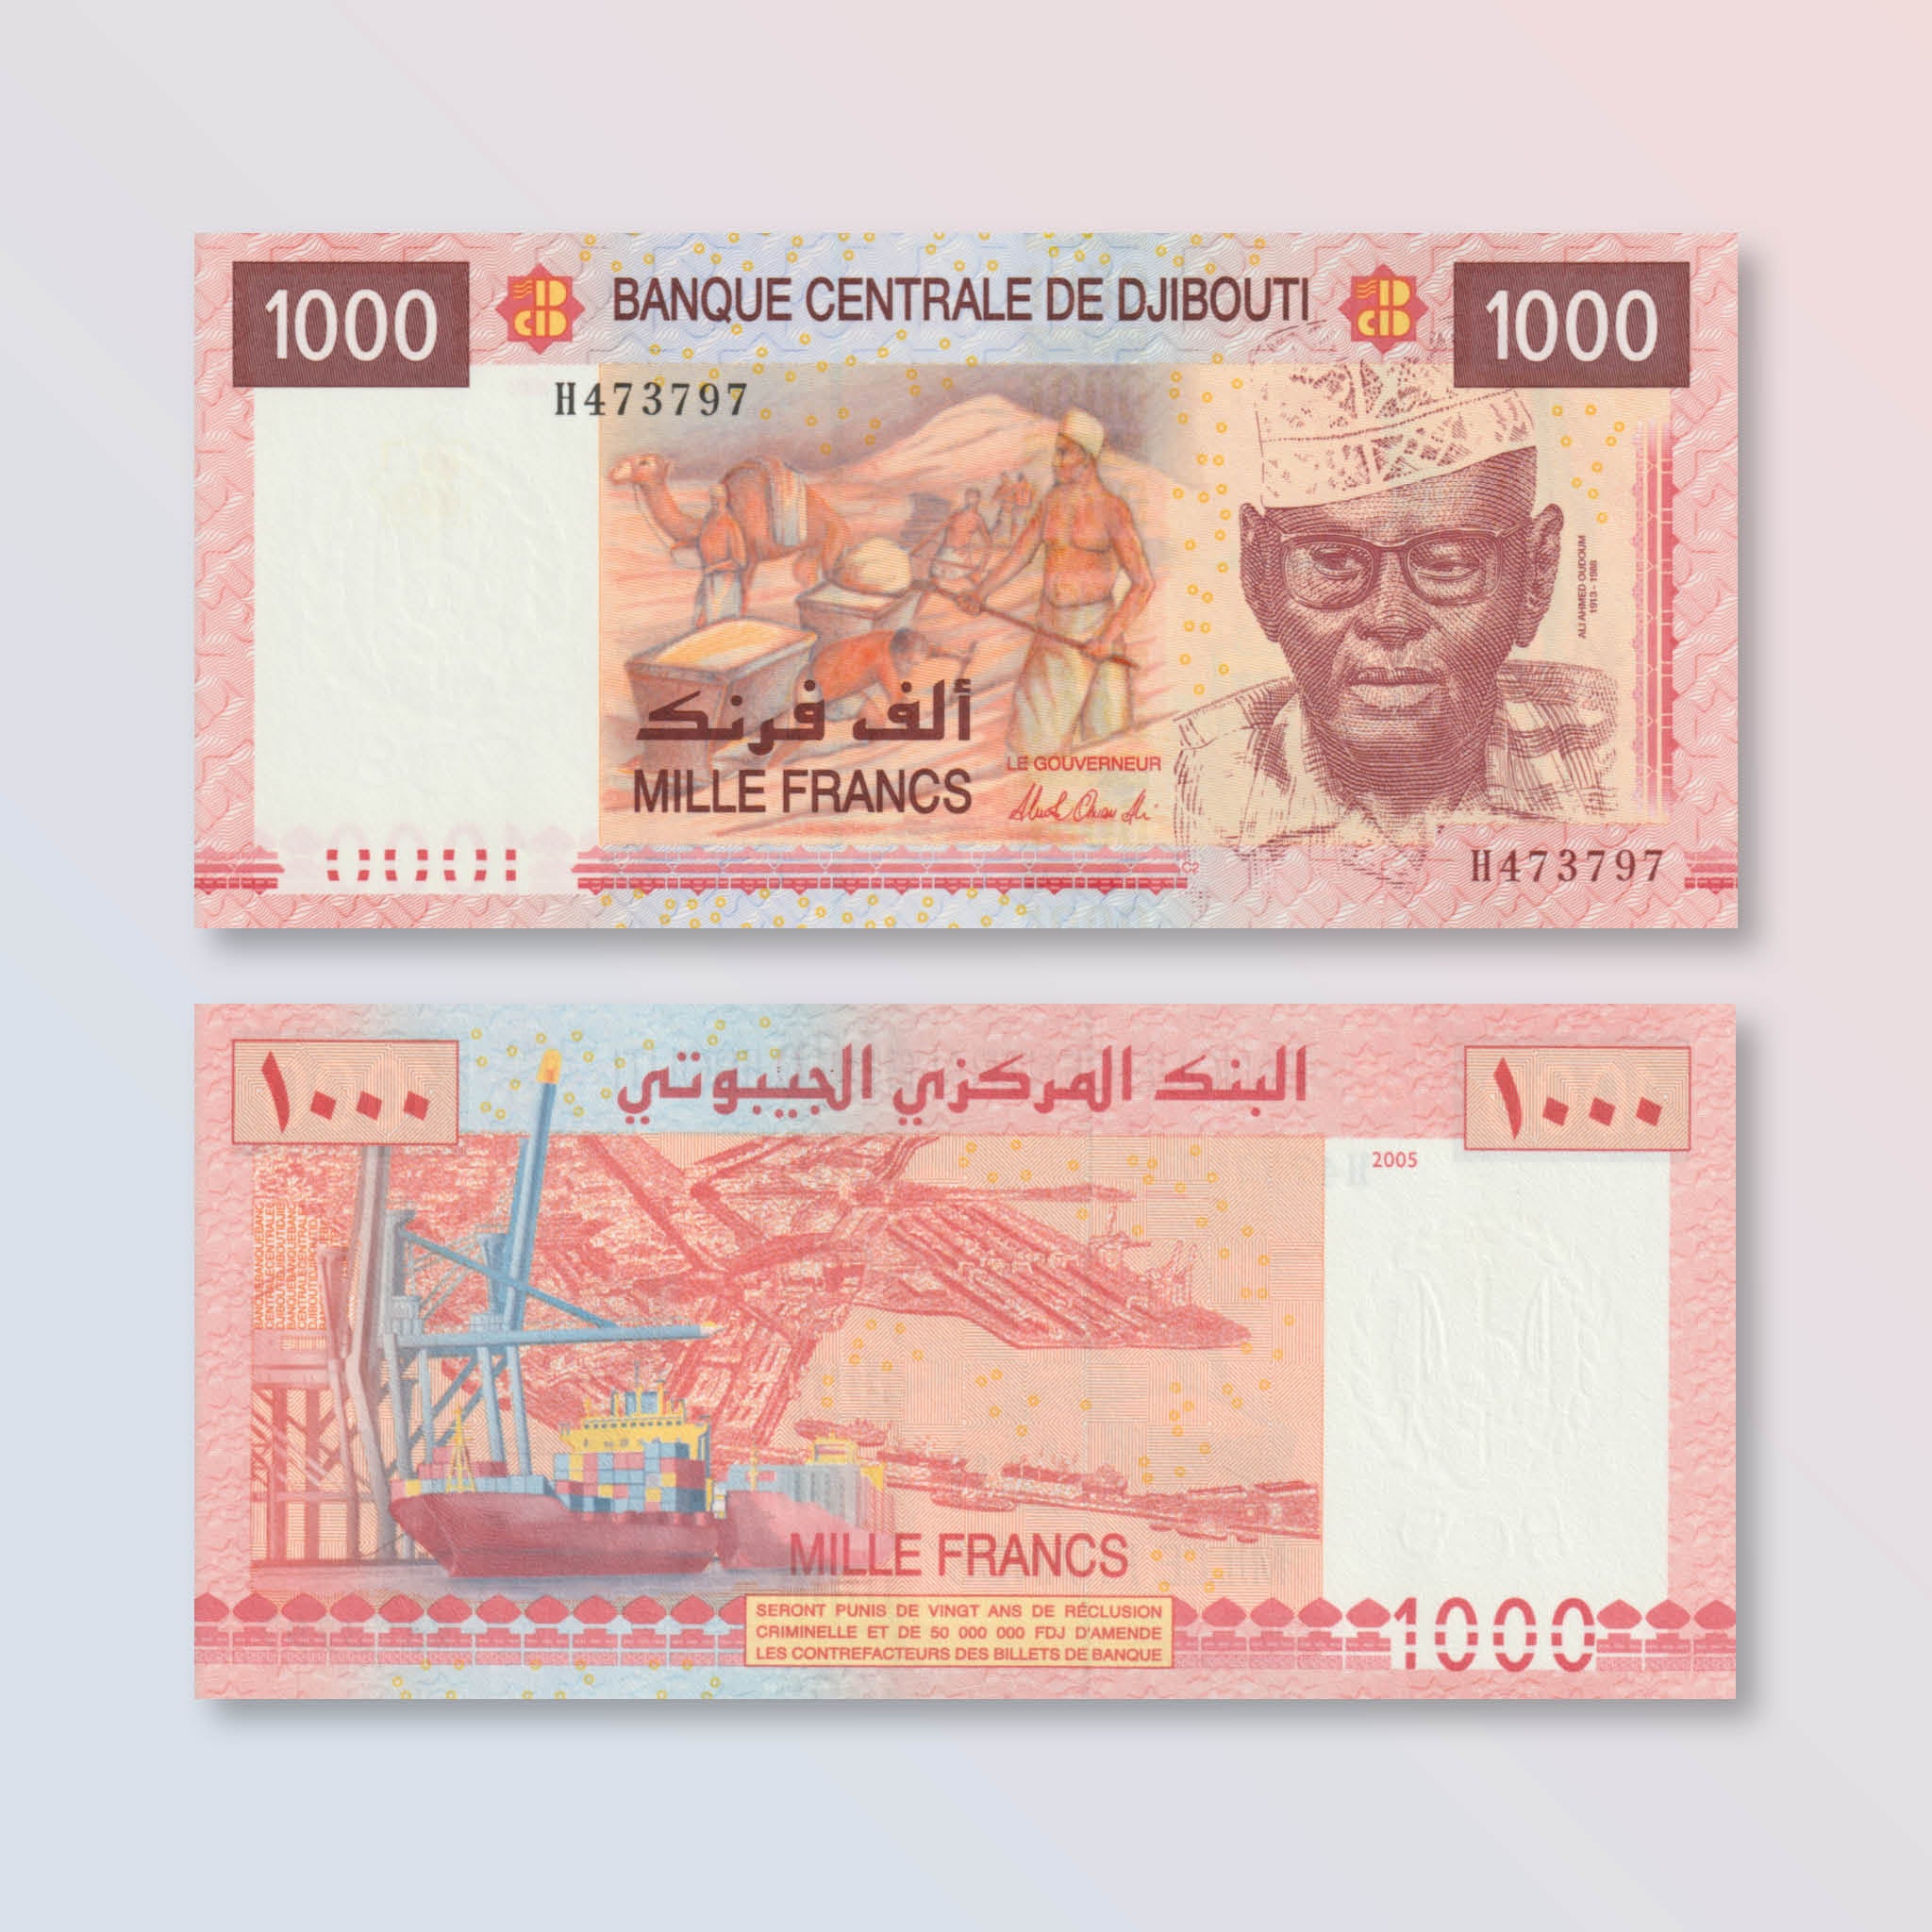 Djibouti 1000 Francs, 2005, B201b, P42a, UNC - Robert's World Money - World Banknotes